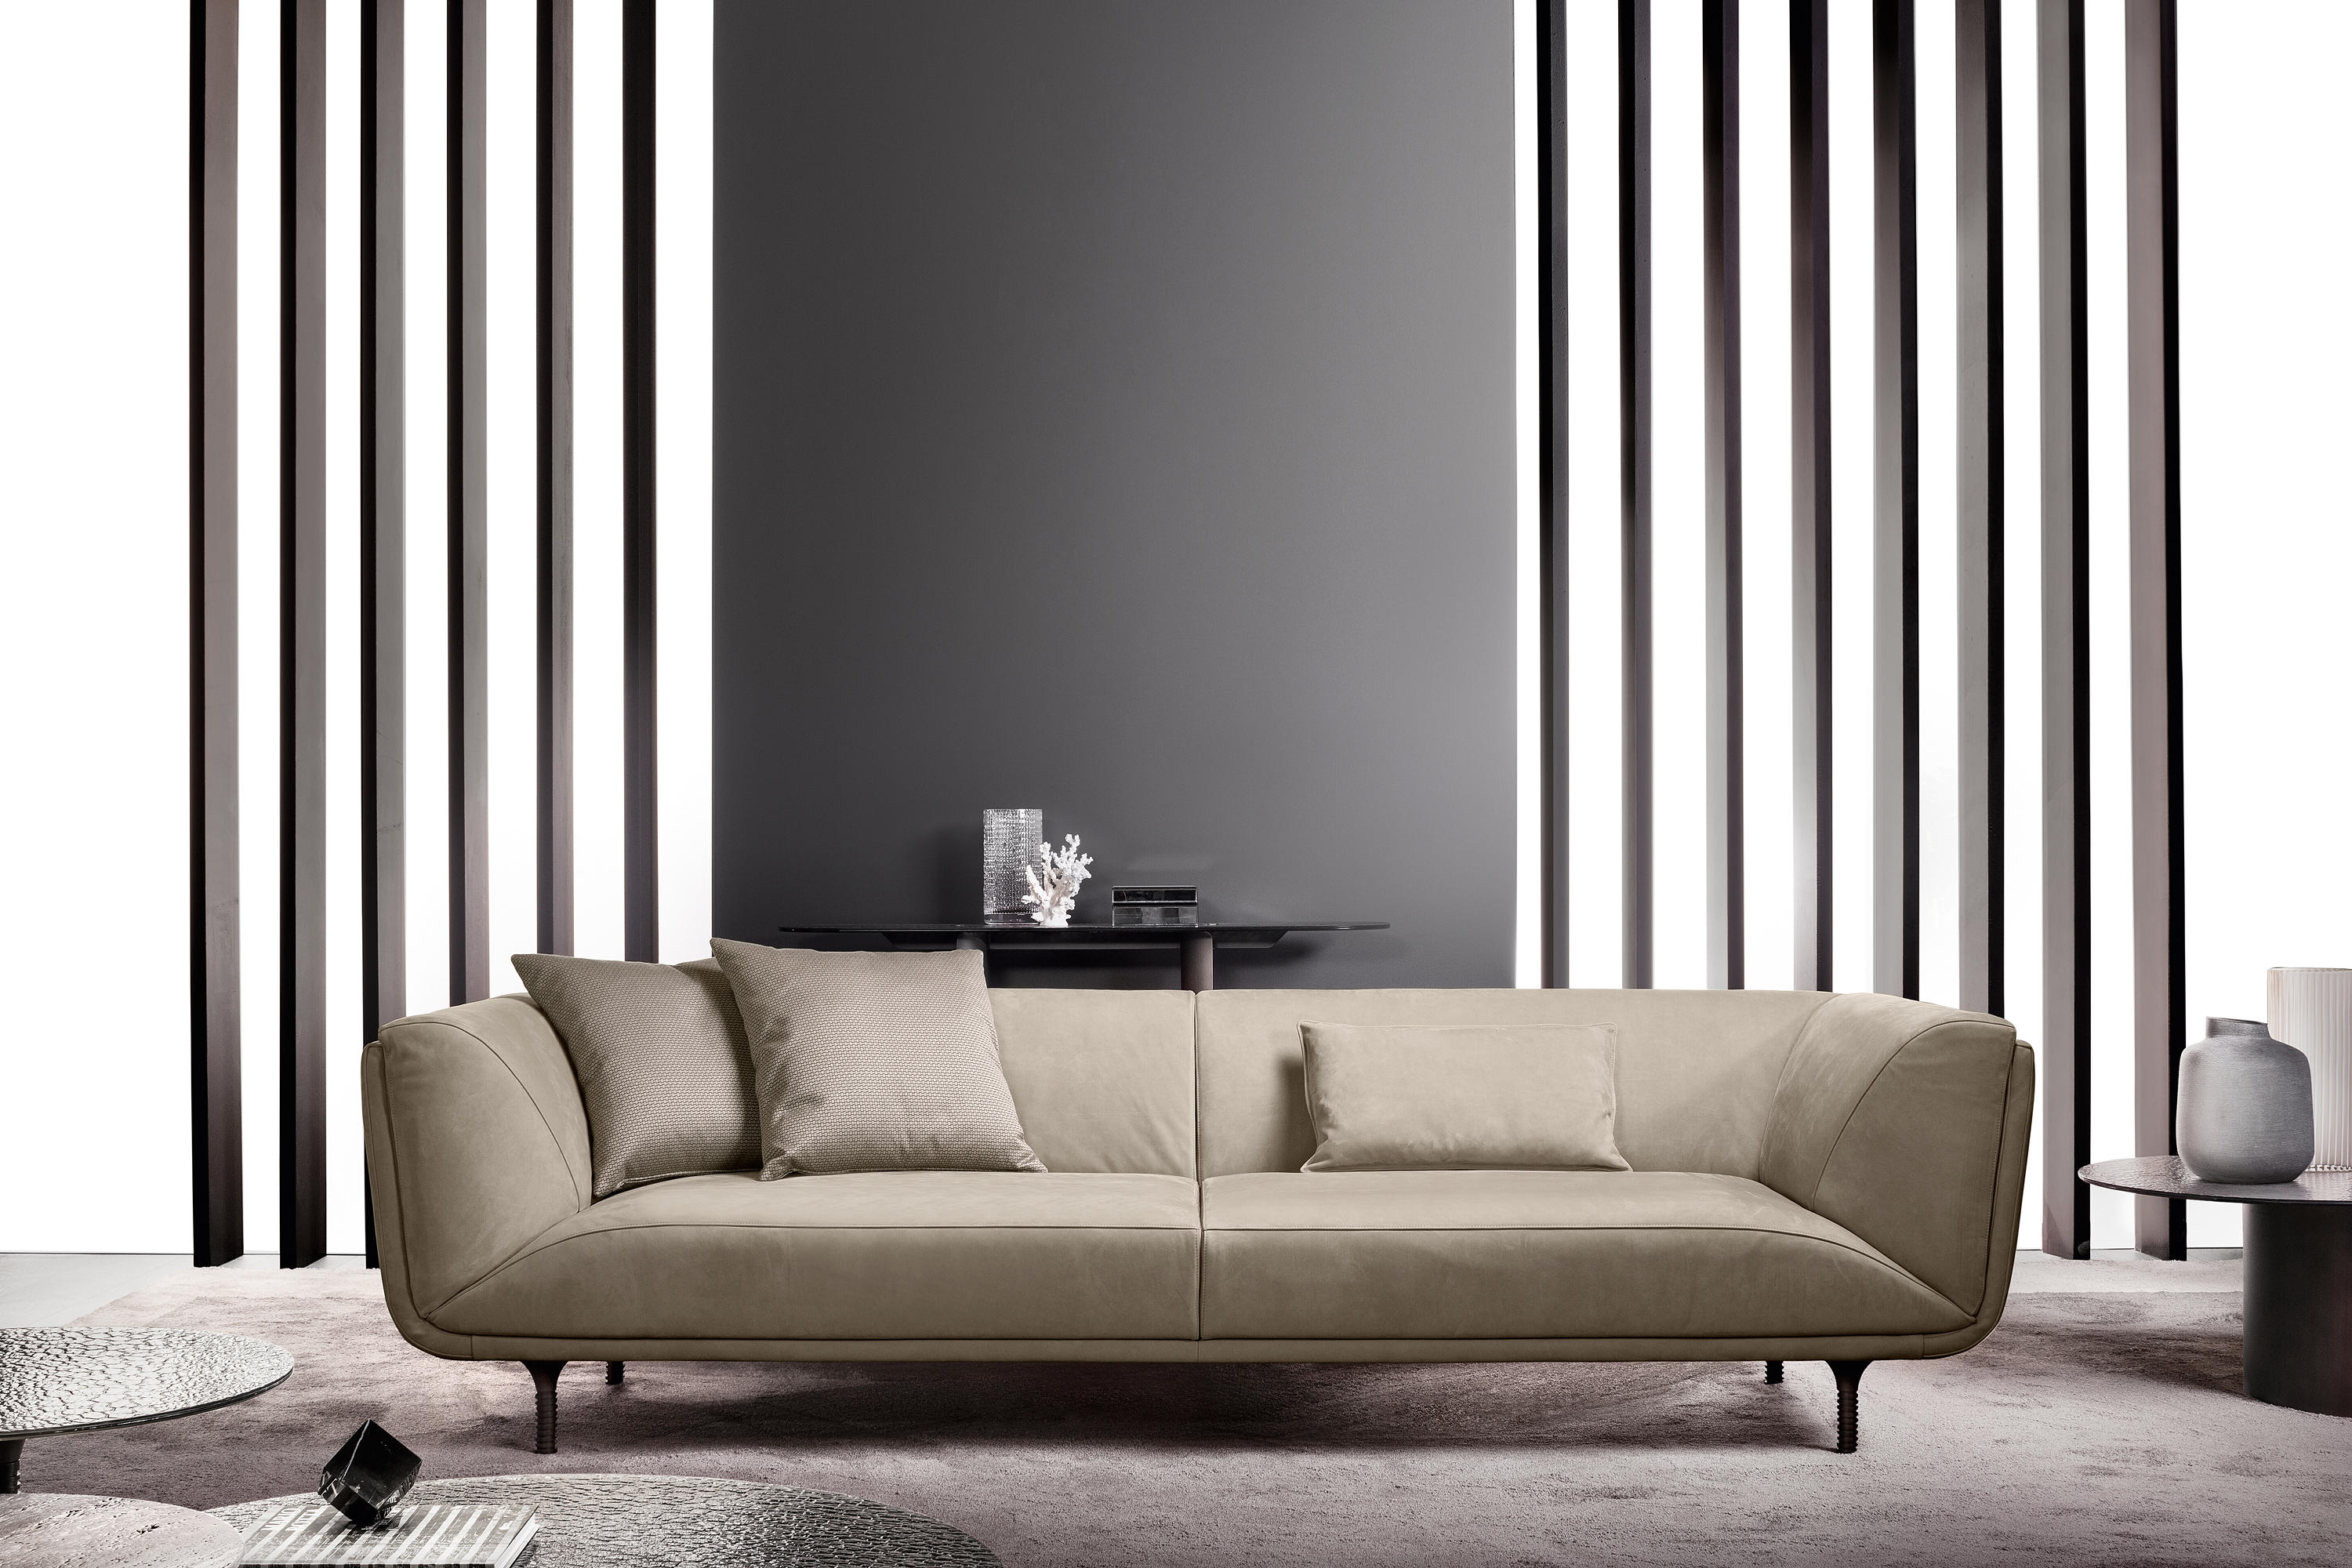 PREMIERE - Sofas from Alberta Pacific Furniture | Architonic